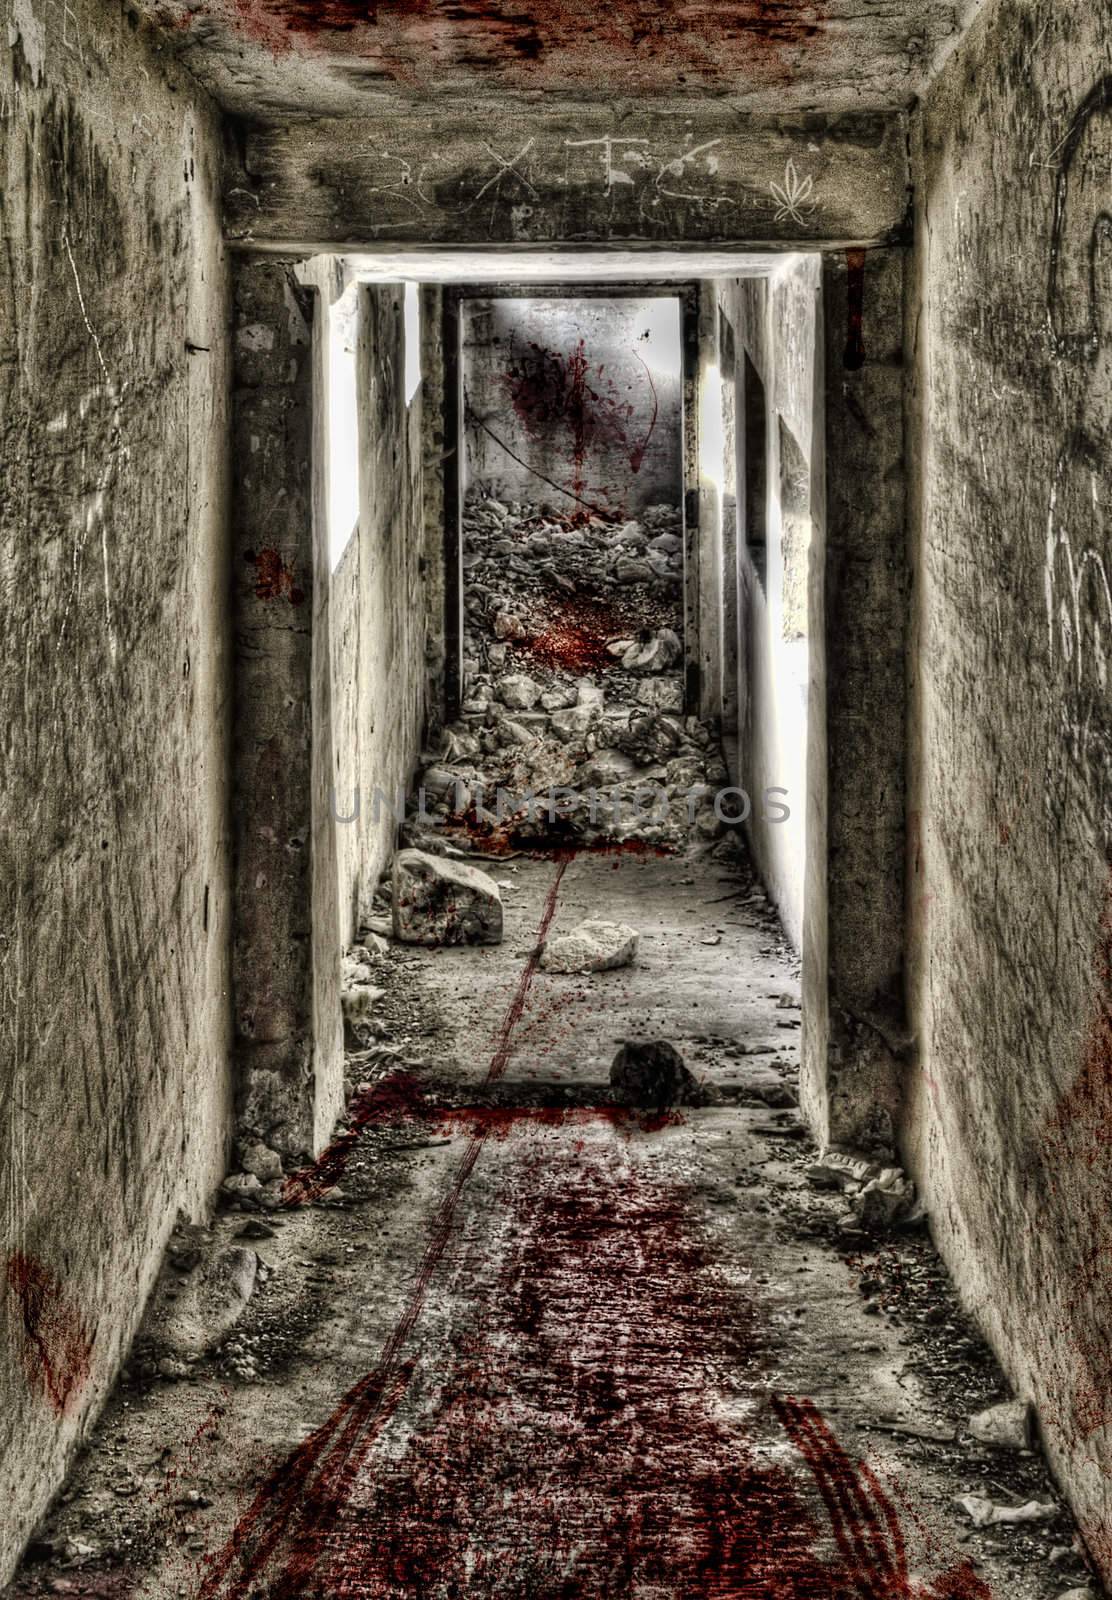 Basement corridor leading through doorway with floor and walls spattered in blood